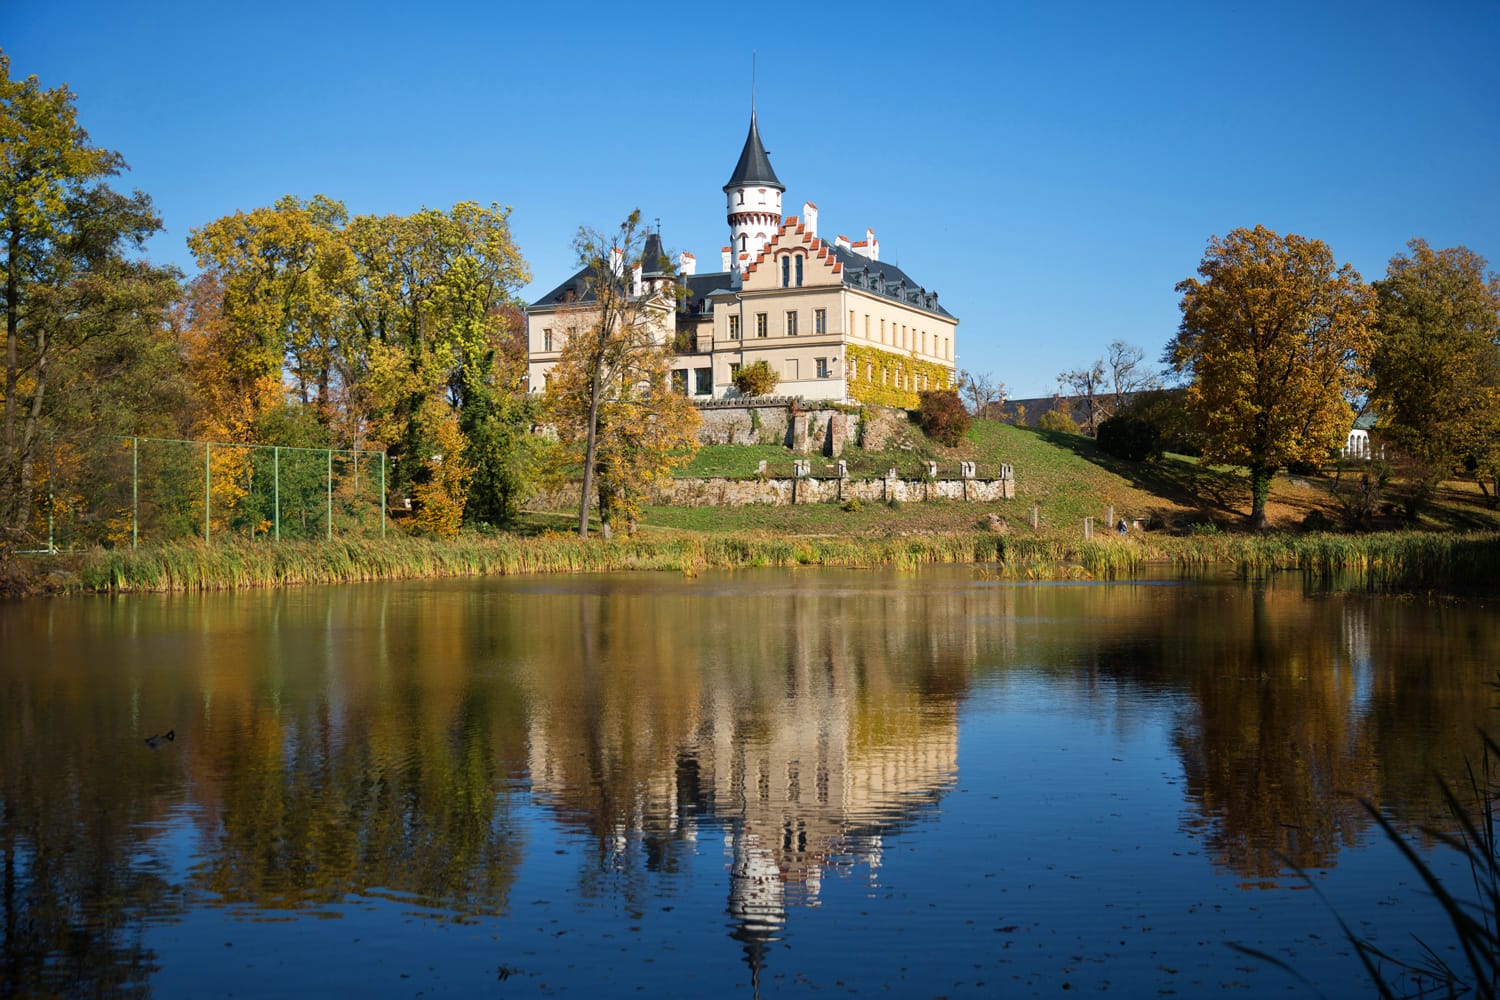 Castle Radun in the Czech Republic